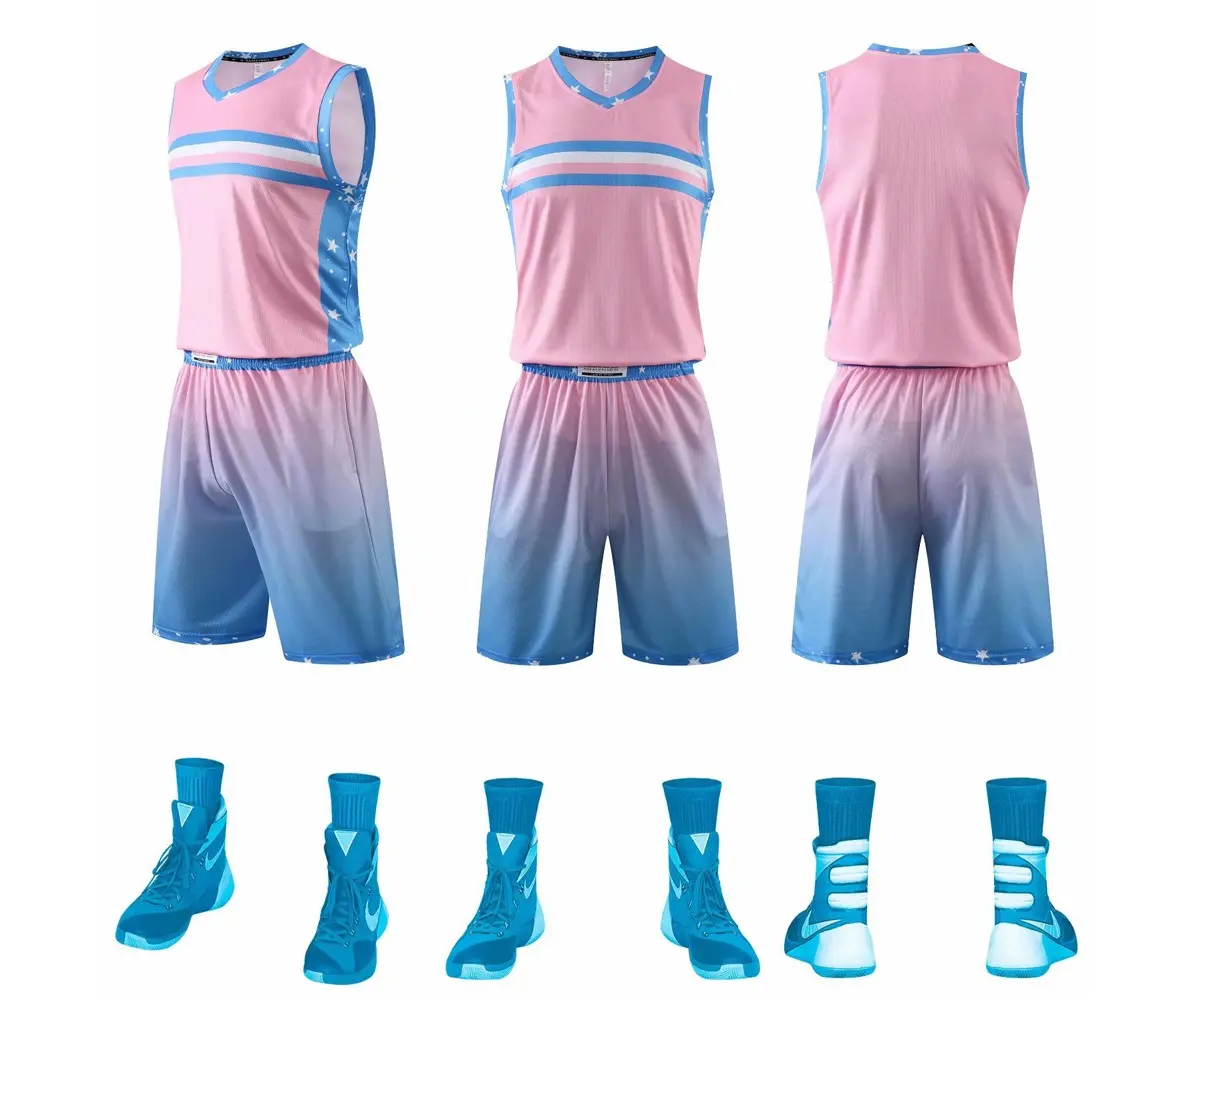 उच्च गुणवत्ता वाले पुरुष खेल अनुकूलित बास्केटबॉल किट टीम क्लब बास्केटबॉल वर्दी खेल पहनें बास्केटबॉल वर्दी